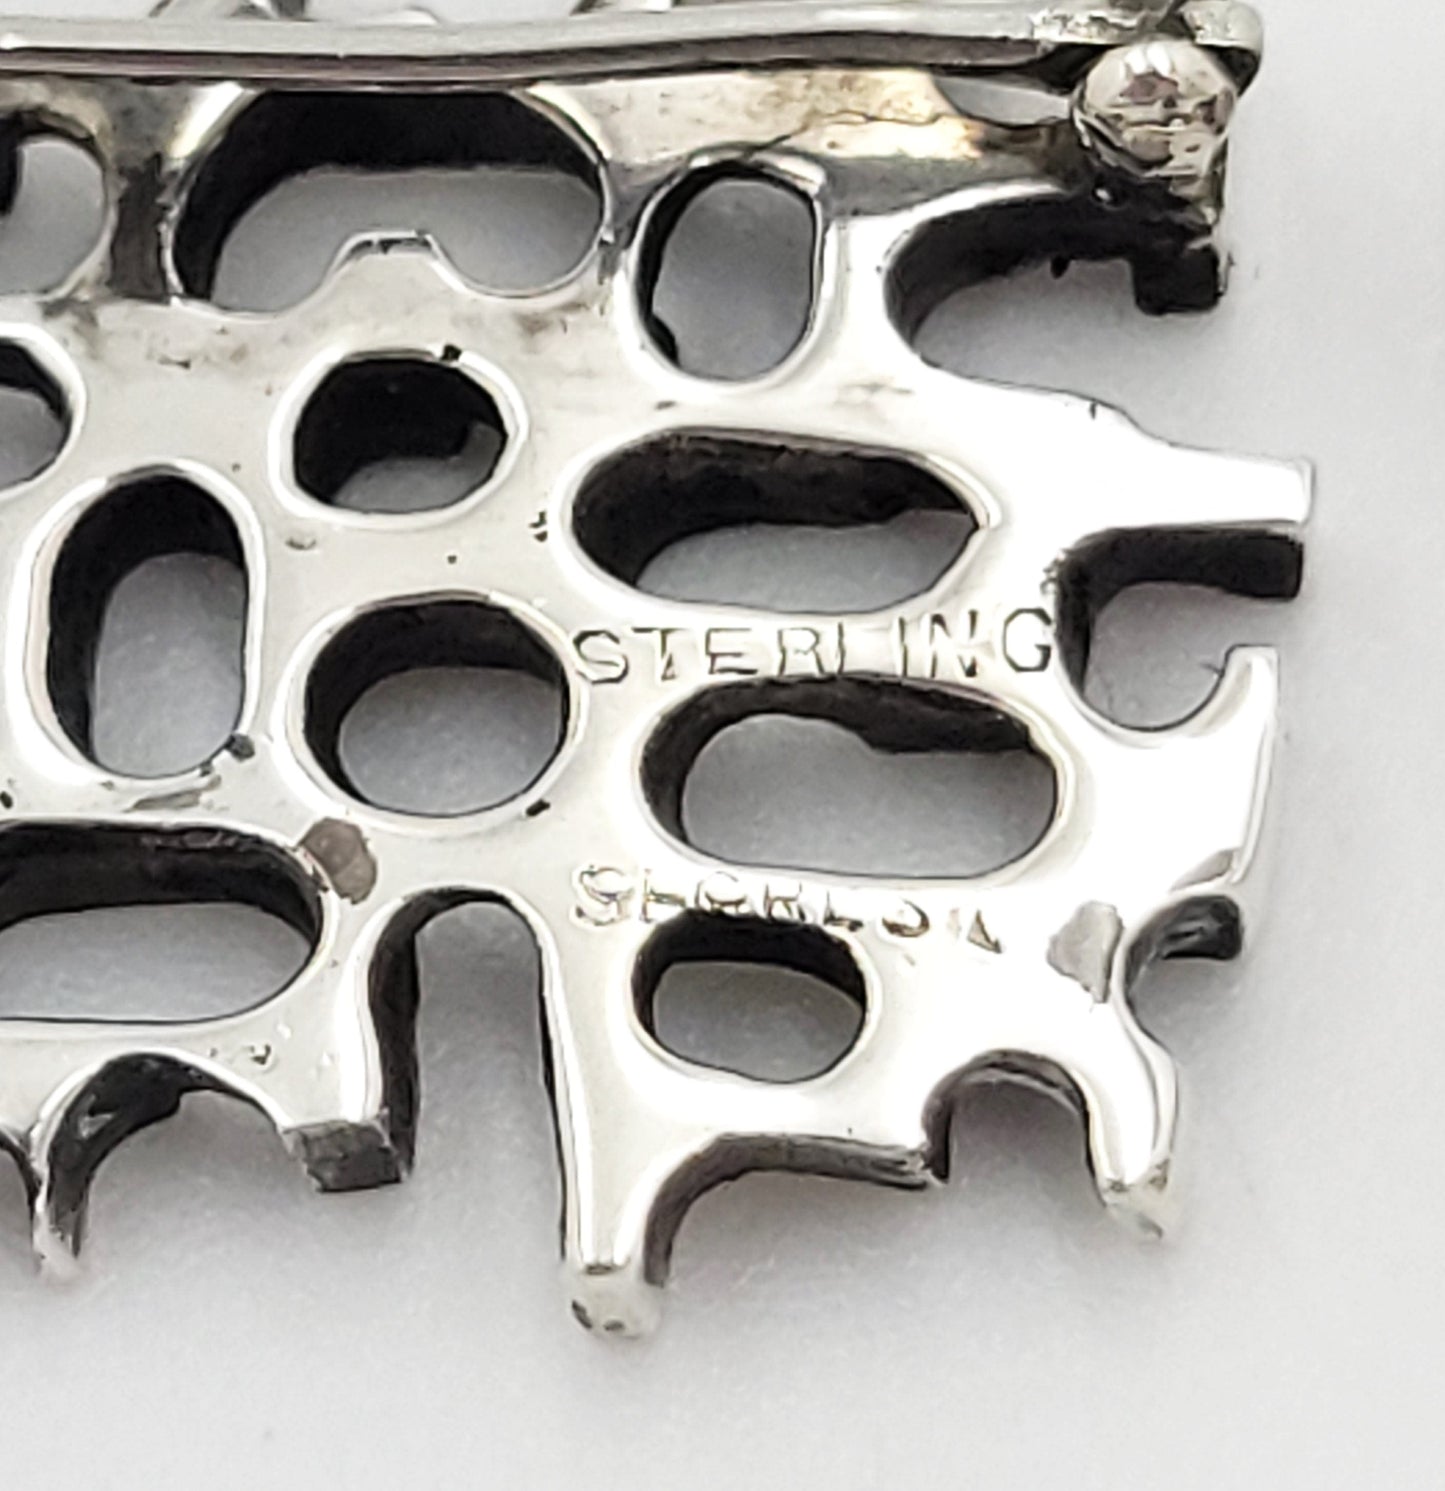 Secrest Jewelry Rare Sterling Silver Abstract Modernist Brutalist Brooch Earring Set by Secrest